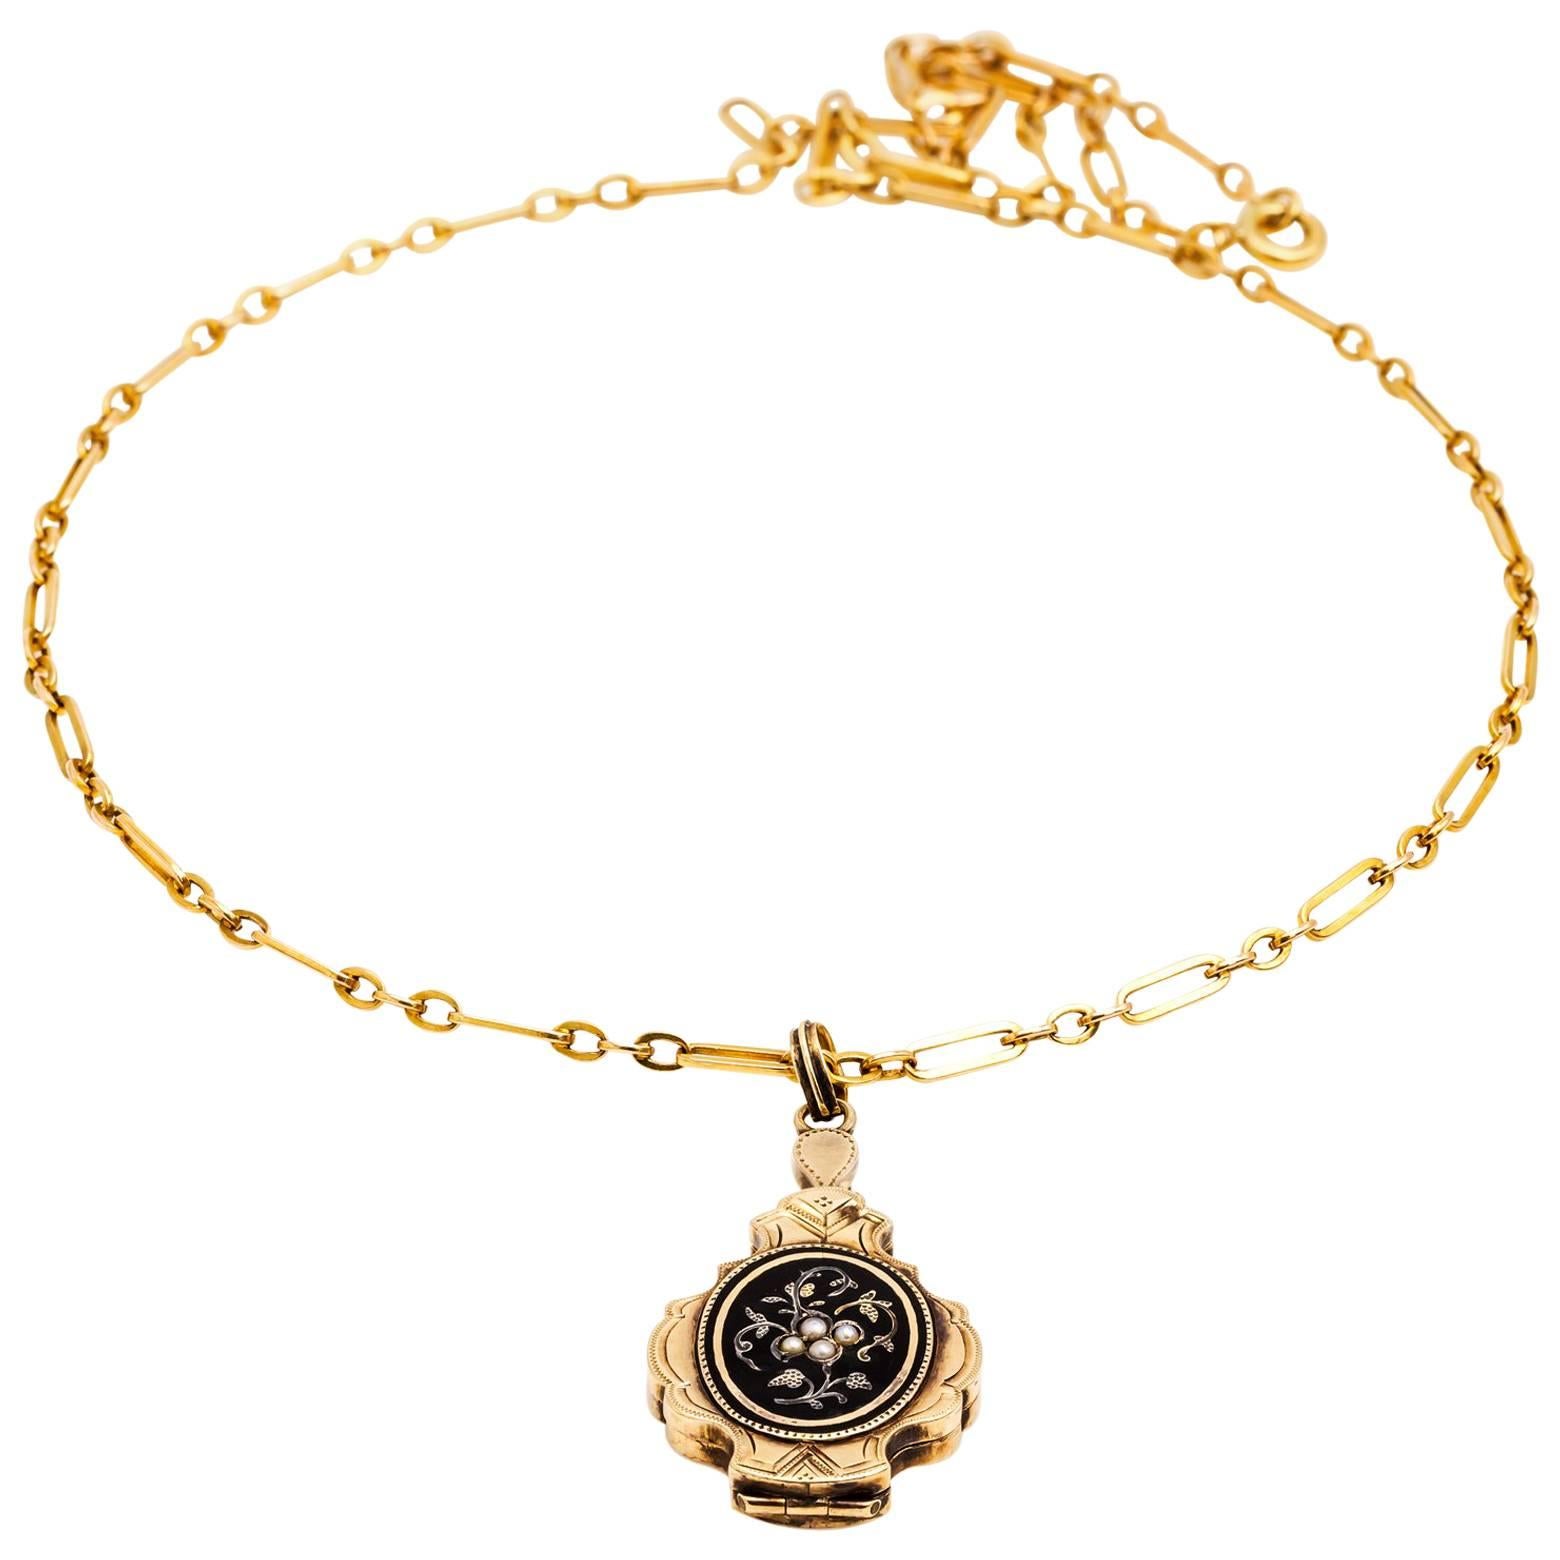 Antique Black Enamel, Pearl and Gold Locket in a Floral Design For Sale